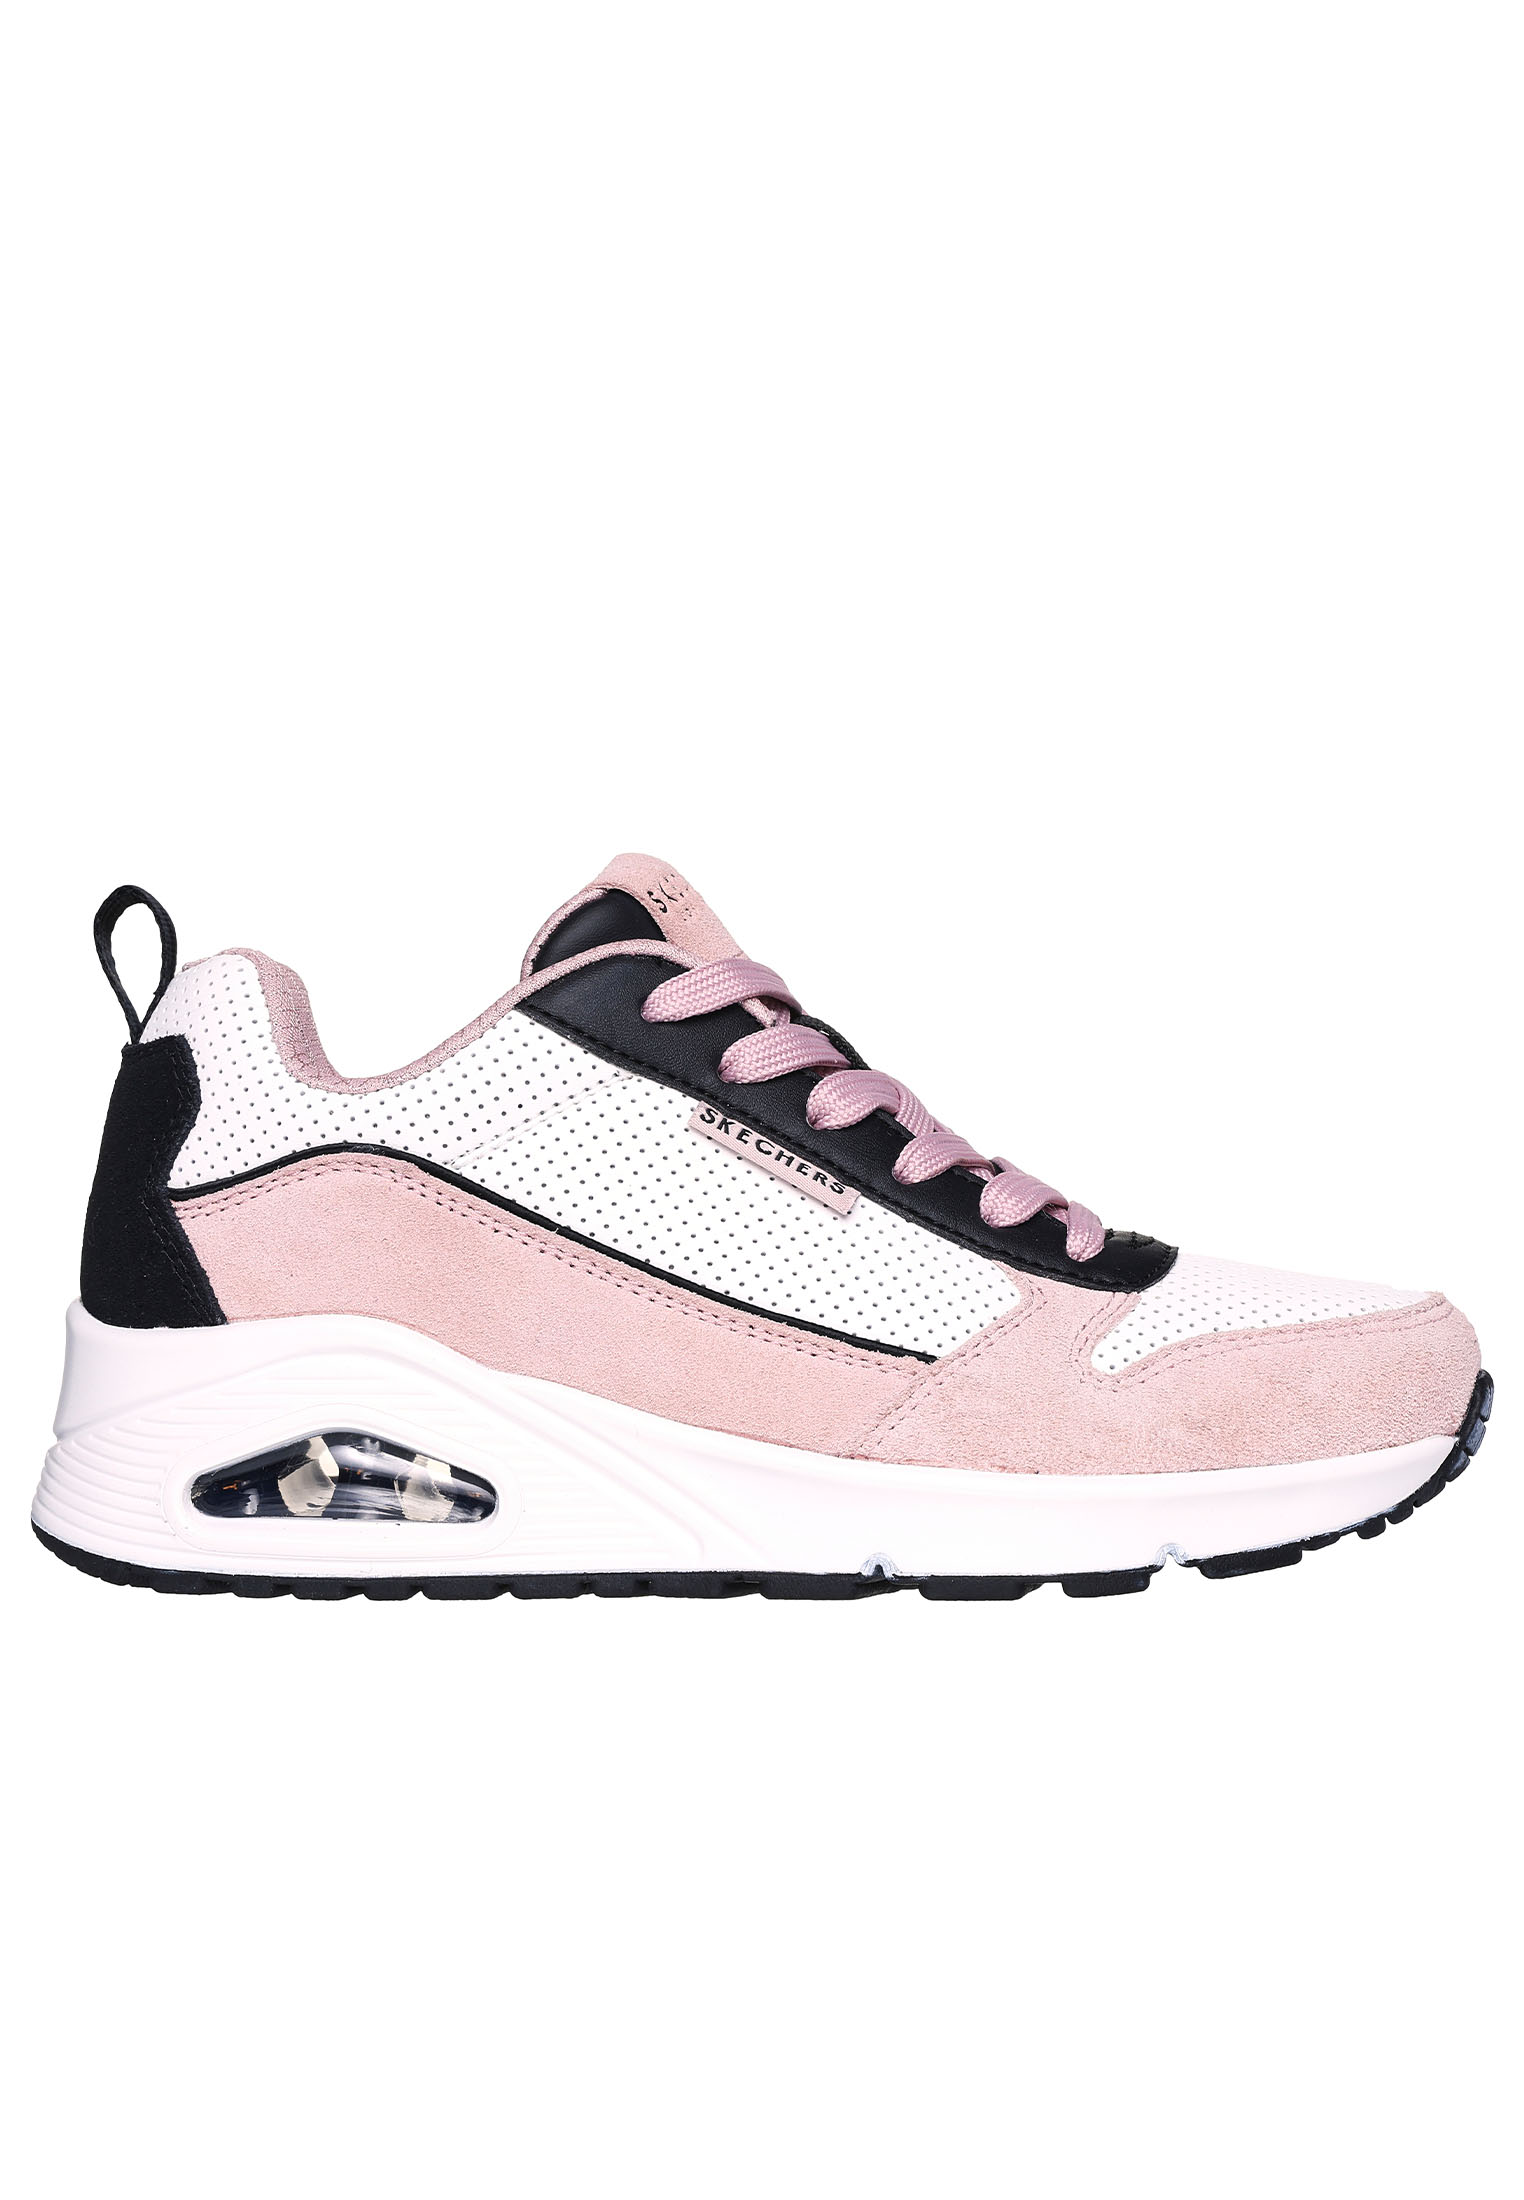 Skechers Sneaker 177105 PKBK 2 Much Fun Pink Black